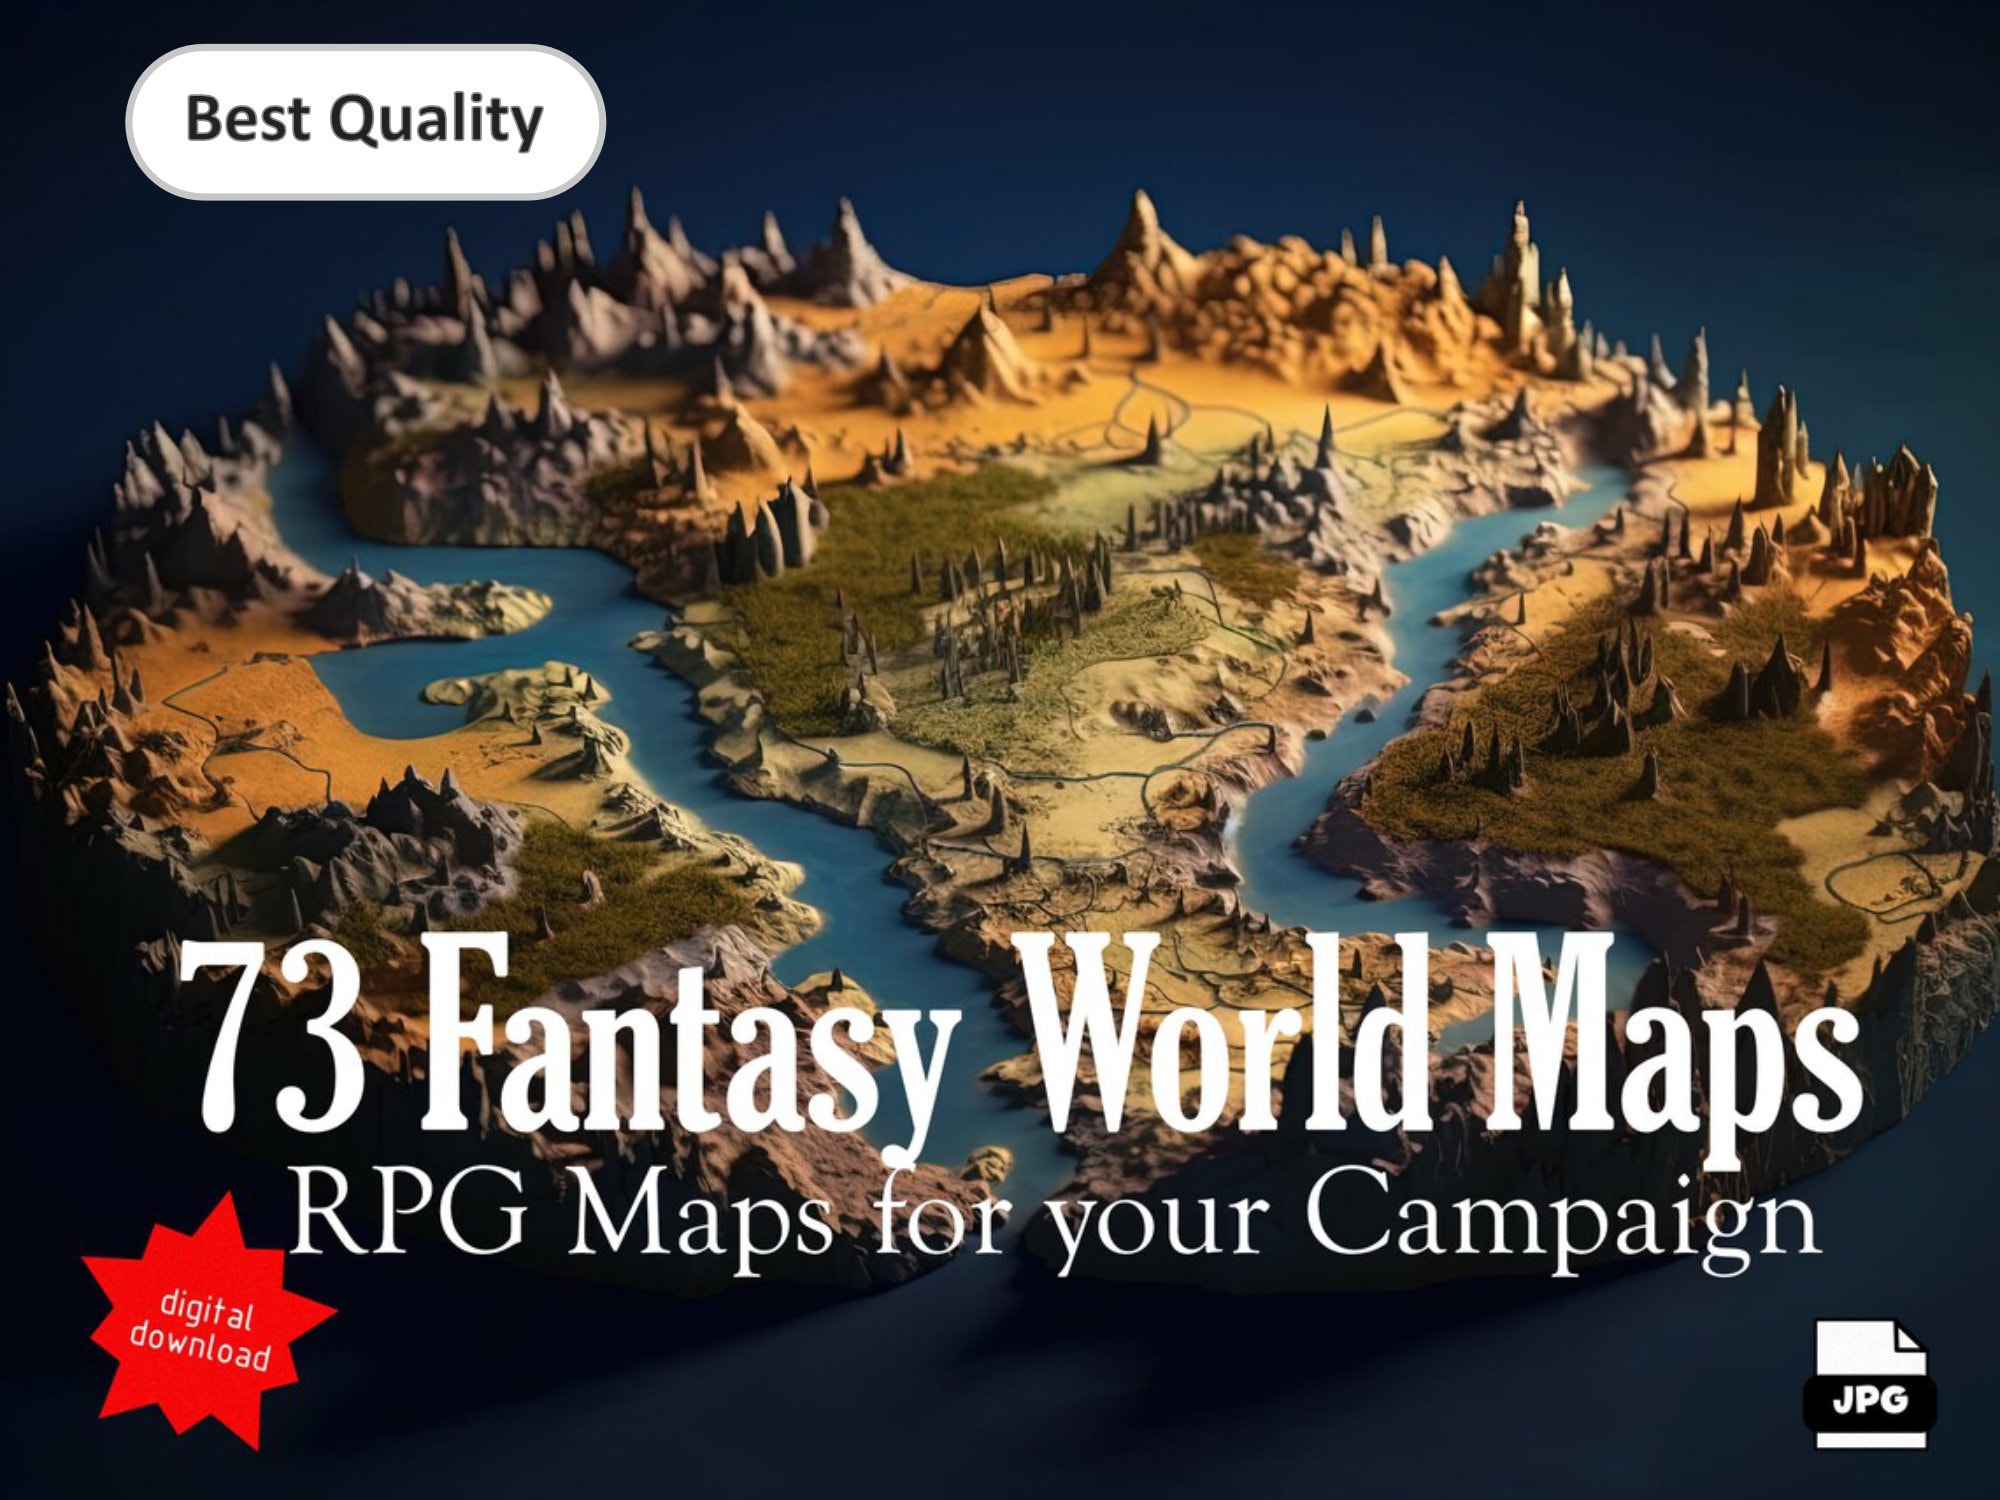 Award winning RPG maps full of adventure!